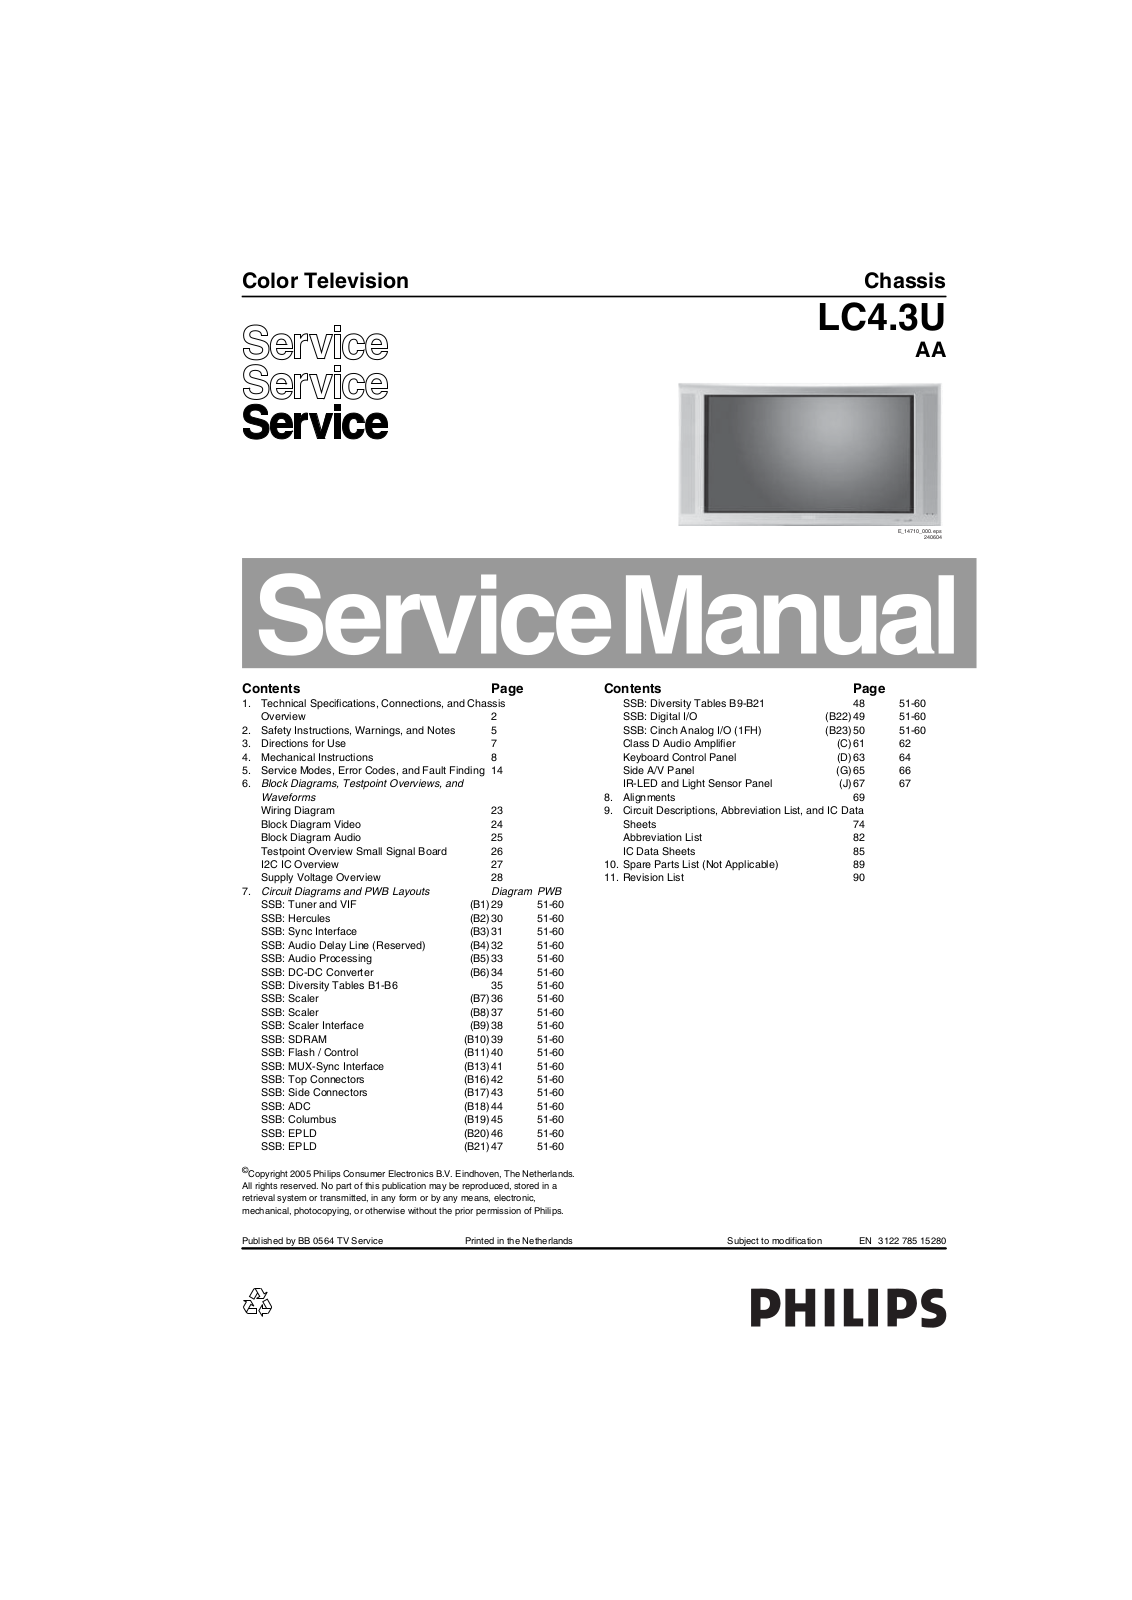 PHILIPS LC4.3U AA Service Manual